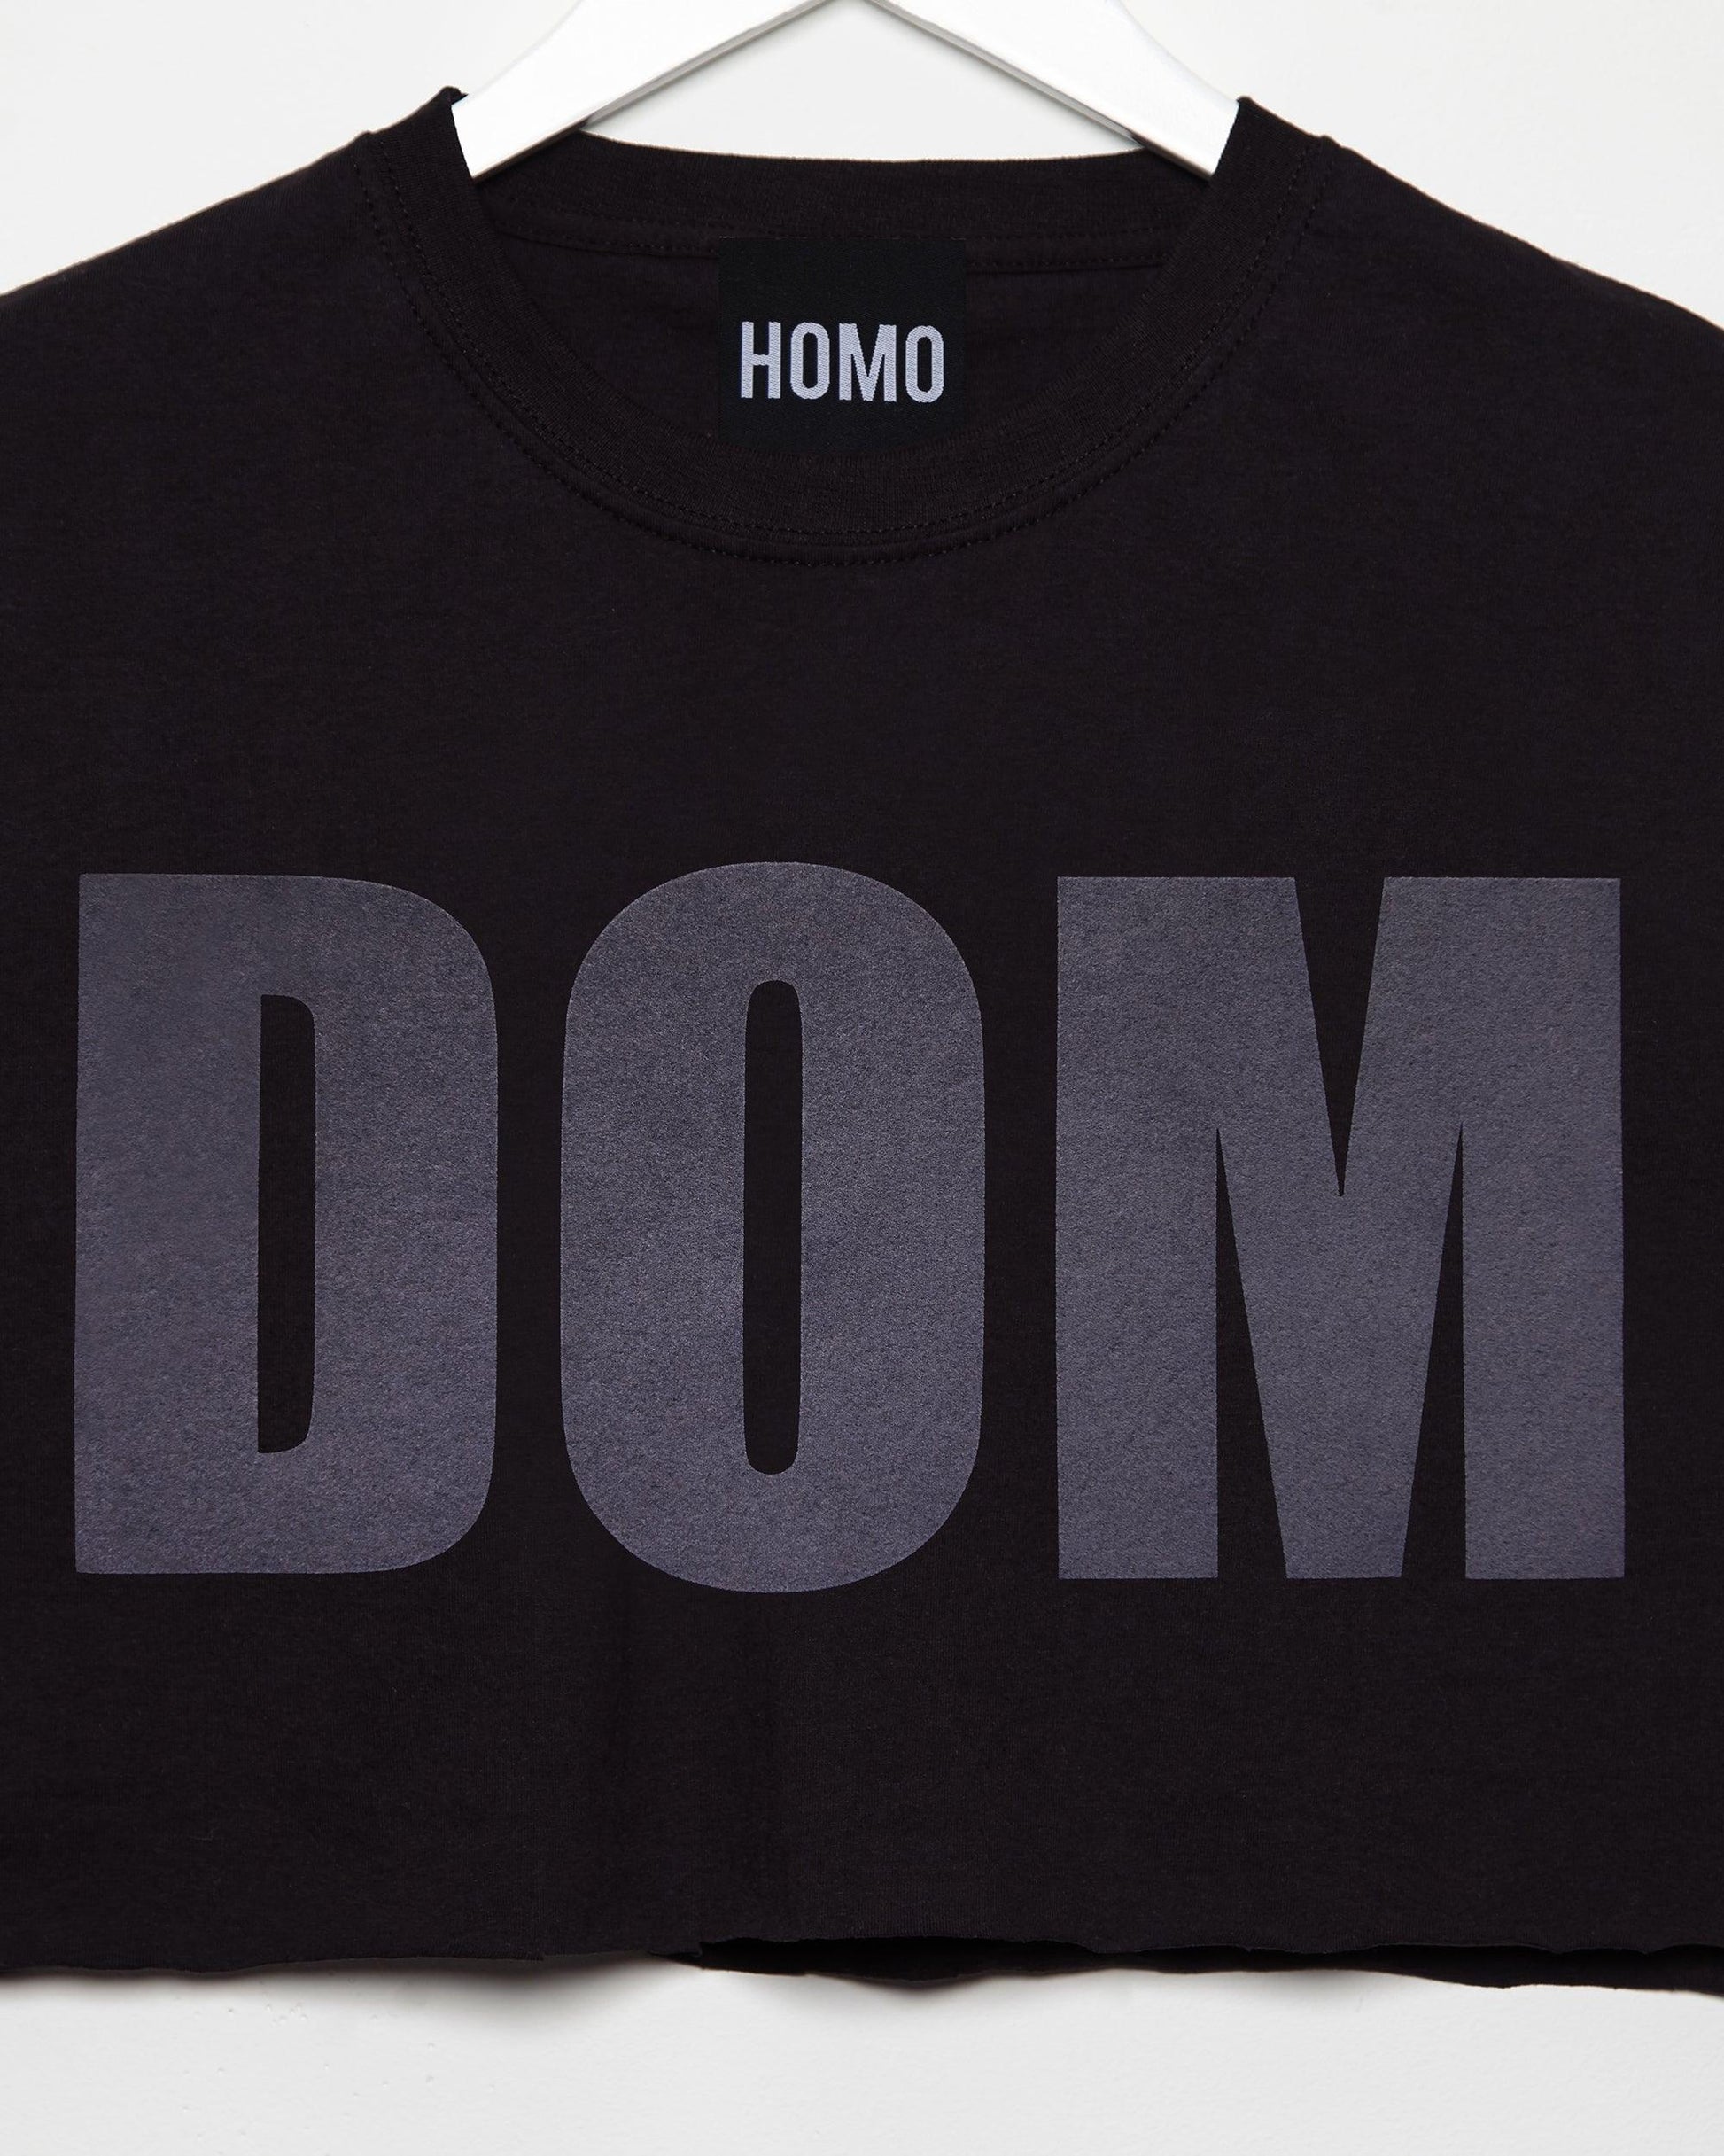 DOM, grey flock print on black - mens sleeveless crop top. - HOMOLONDON